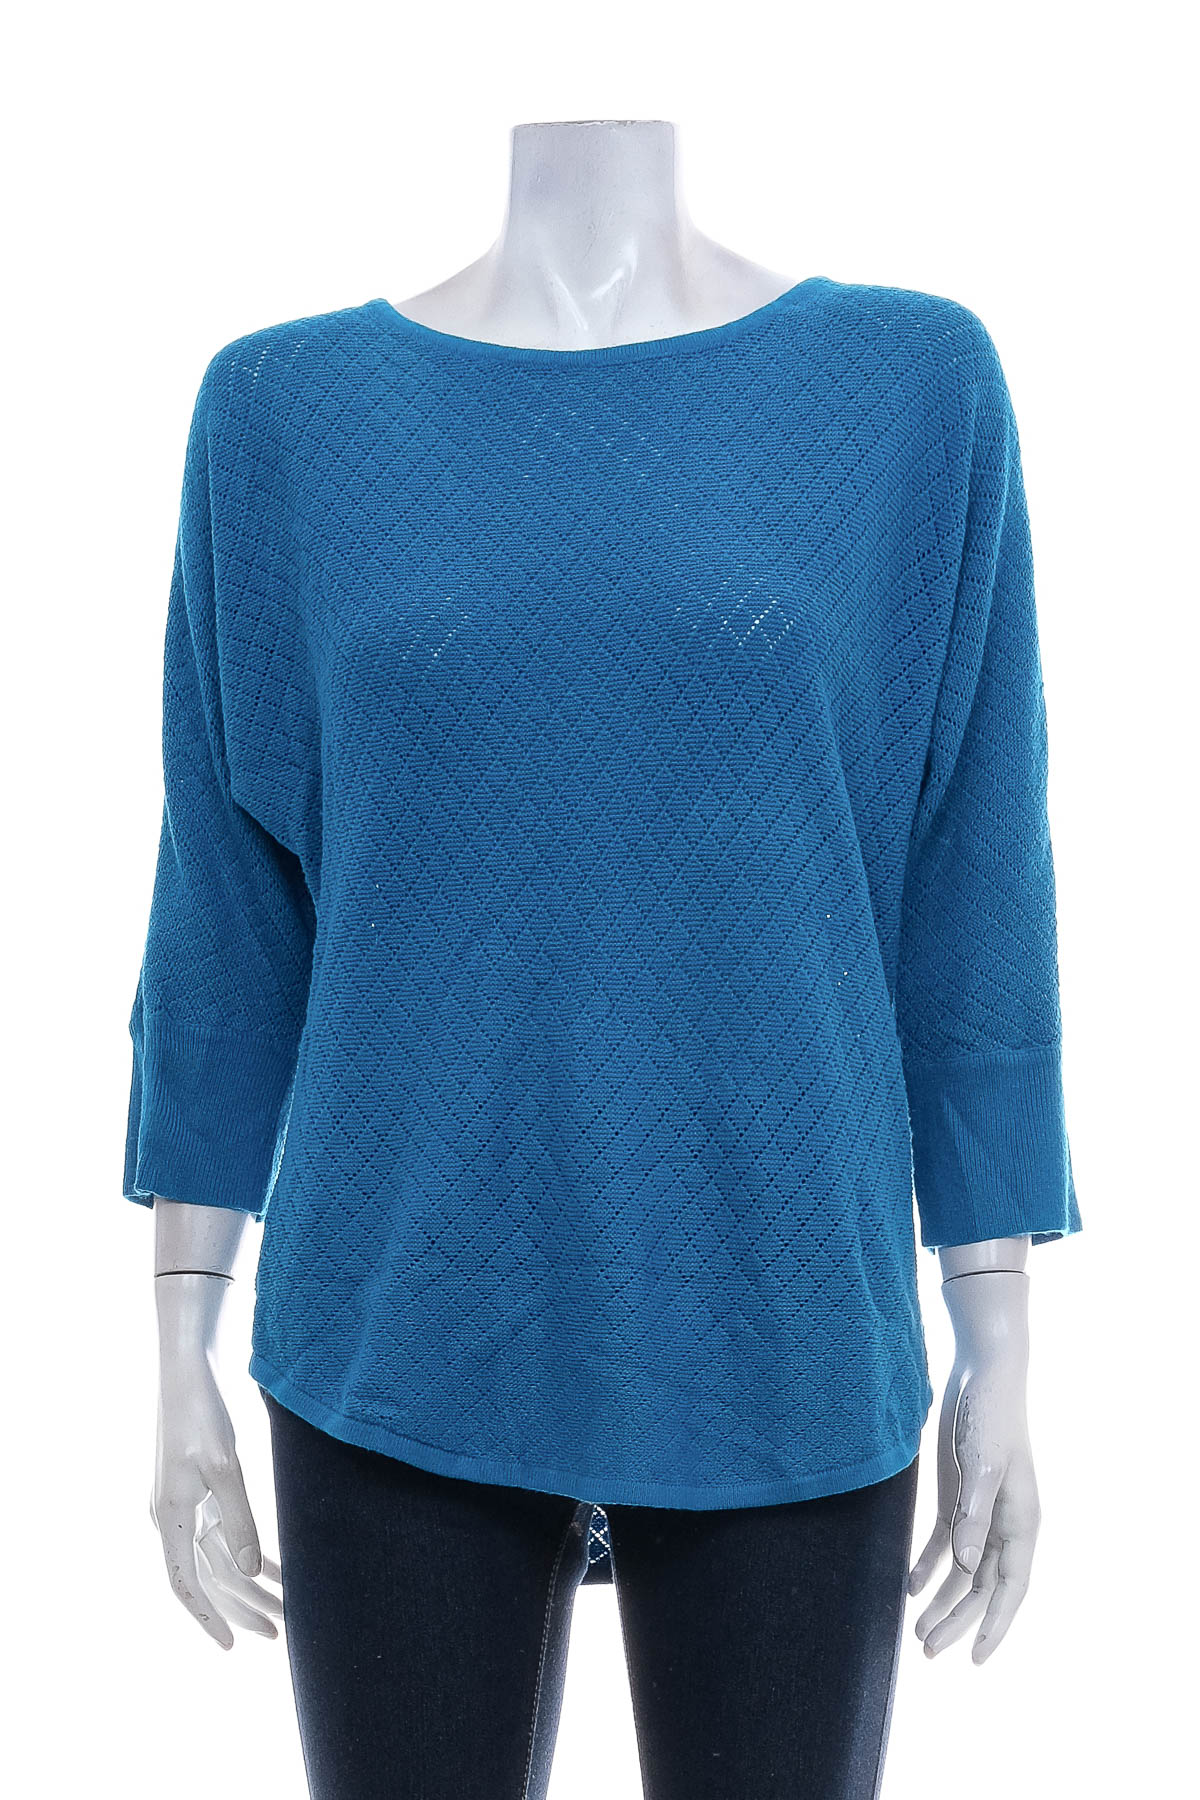 Women's sweater - New York & Company - 0